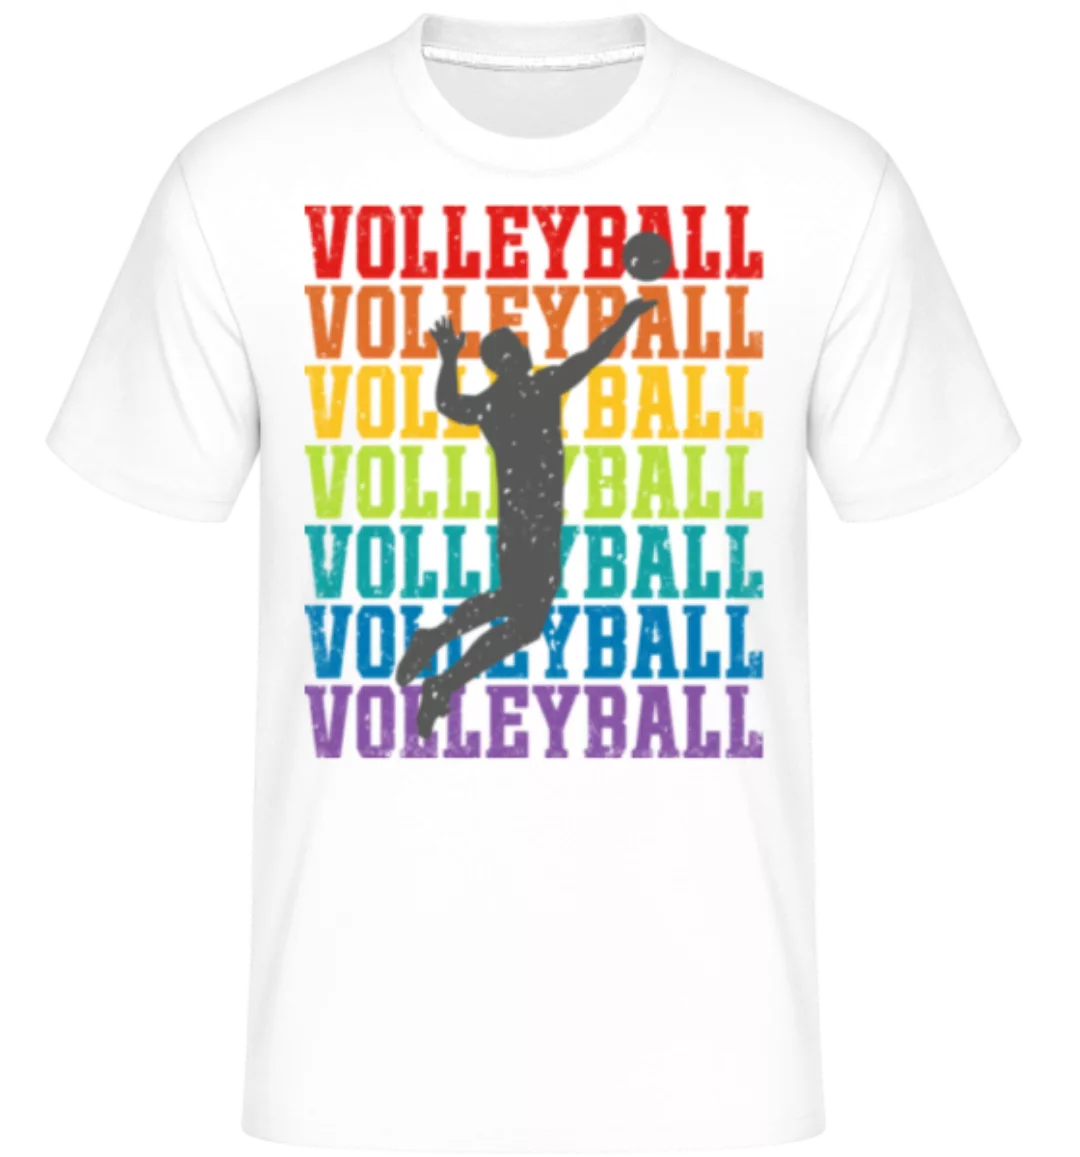 Volleyball Retro Man · Shirtinator Männer T-Shirt günstig online kaufen